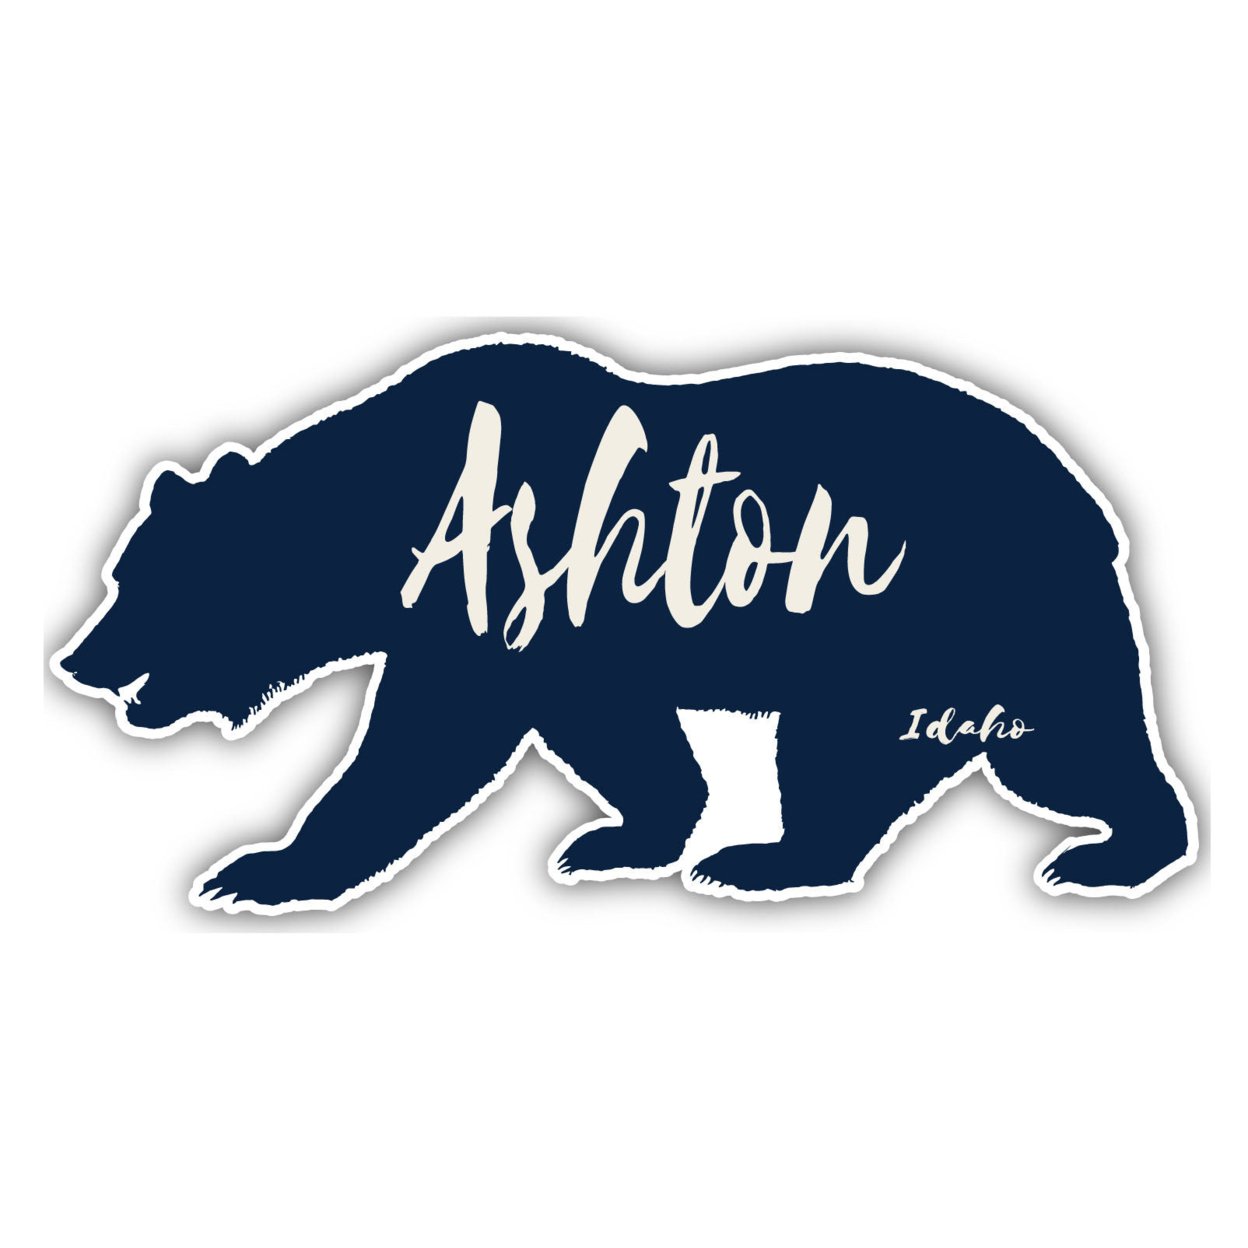 Ashton Idaho Souvenir Decorative Stickers (Choose Theme And Size) - Single Unit, 2-Inch, Adventures Awaits